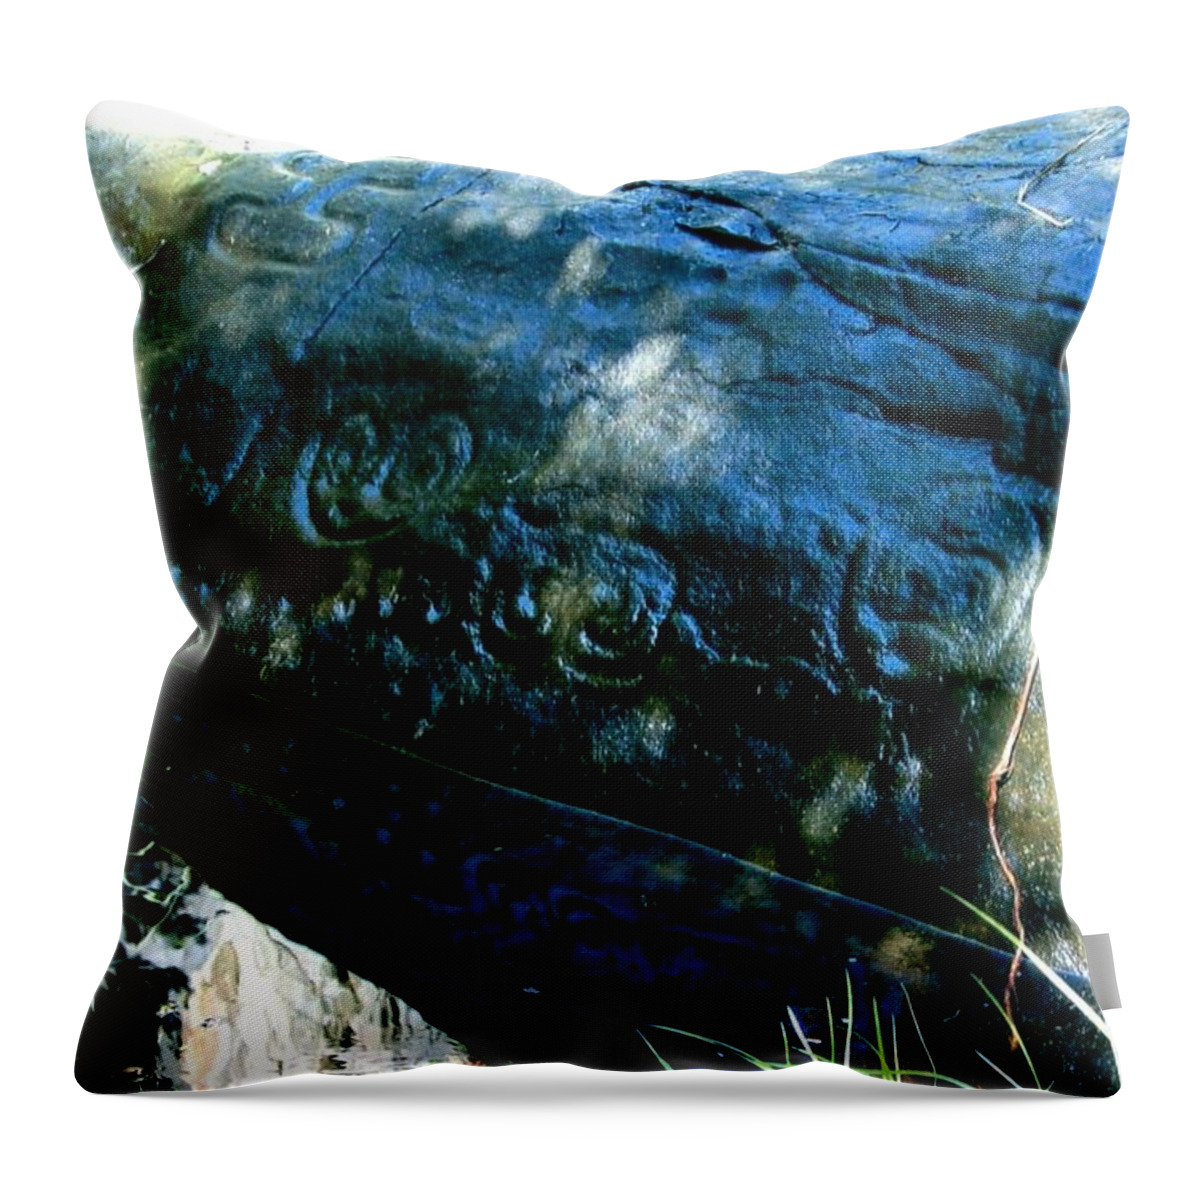 Caribbean Throw Pillow featuring the photograph Petroglyphs by Robert Nickologianis